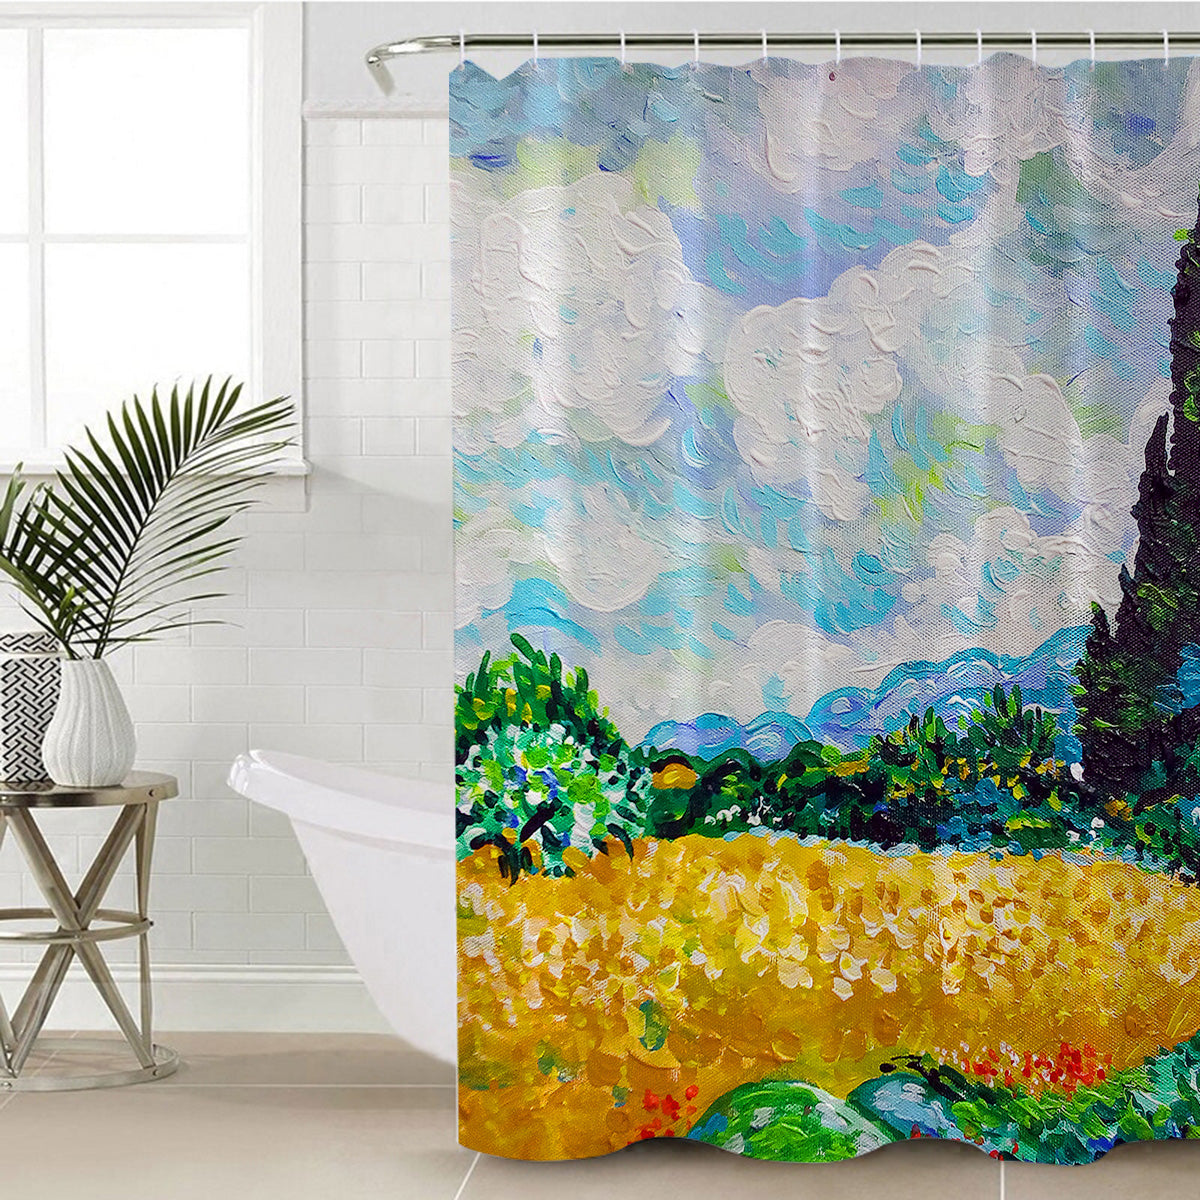 Van Gogh's Wheat Fields Shower Curtain